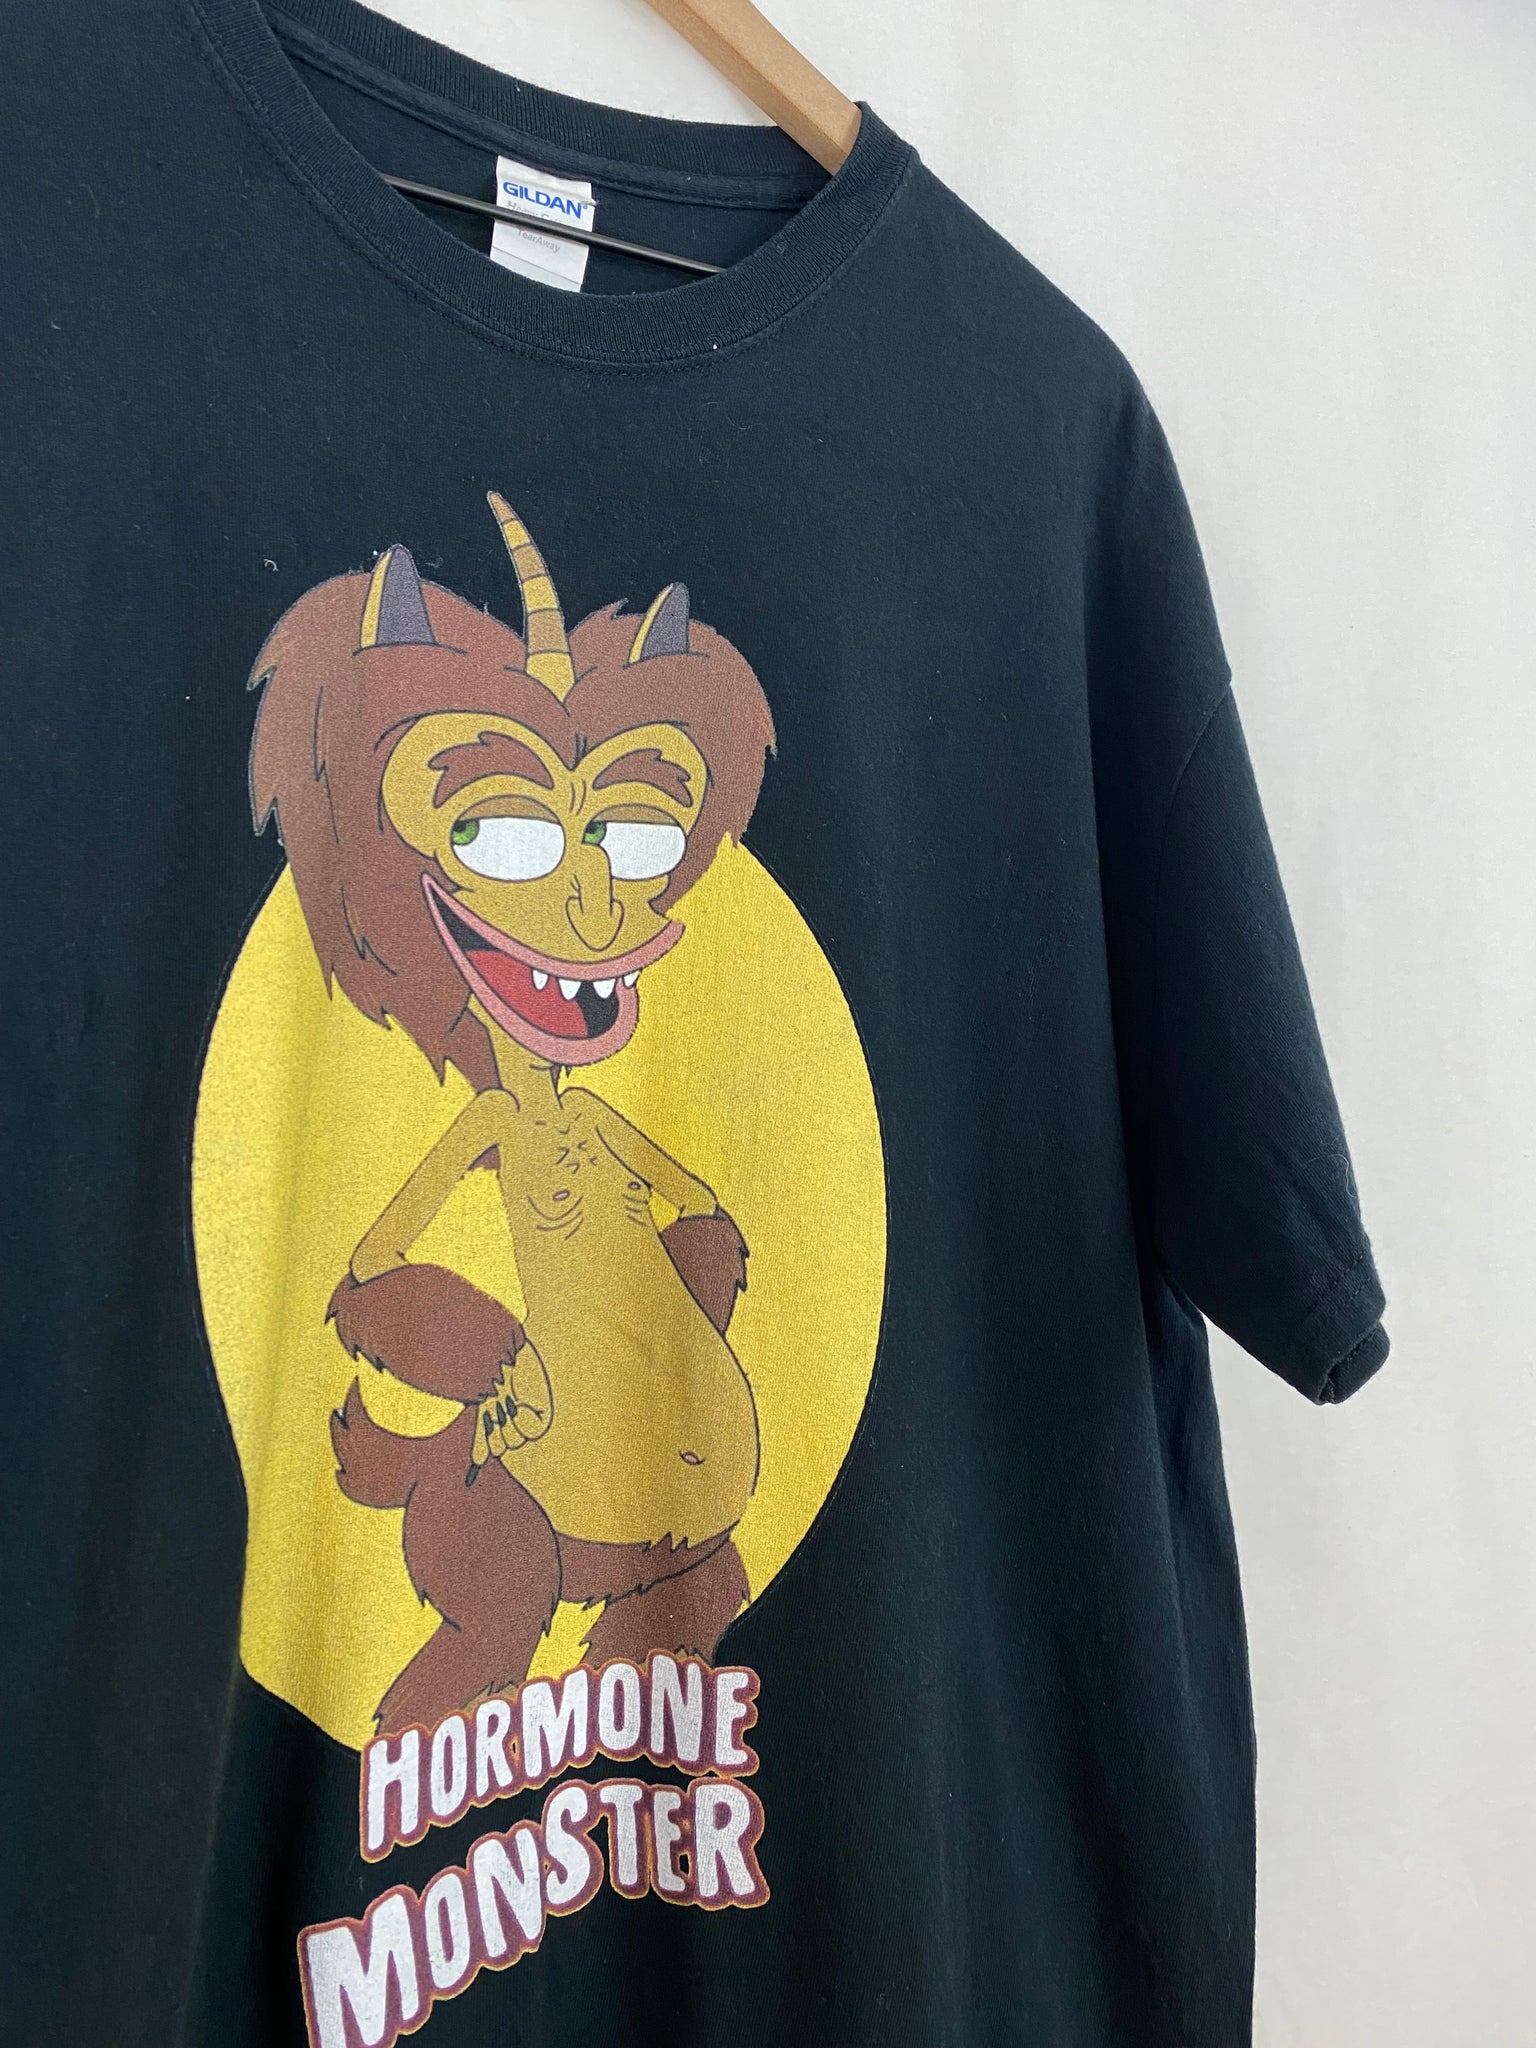 Big Hormone Monster T-Shirt Above Average